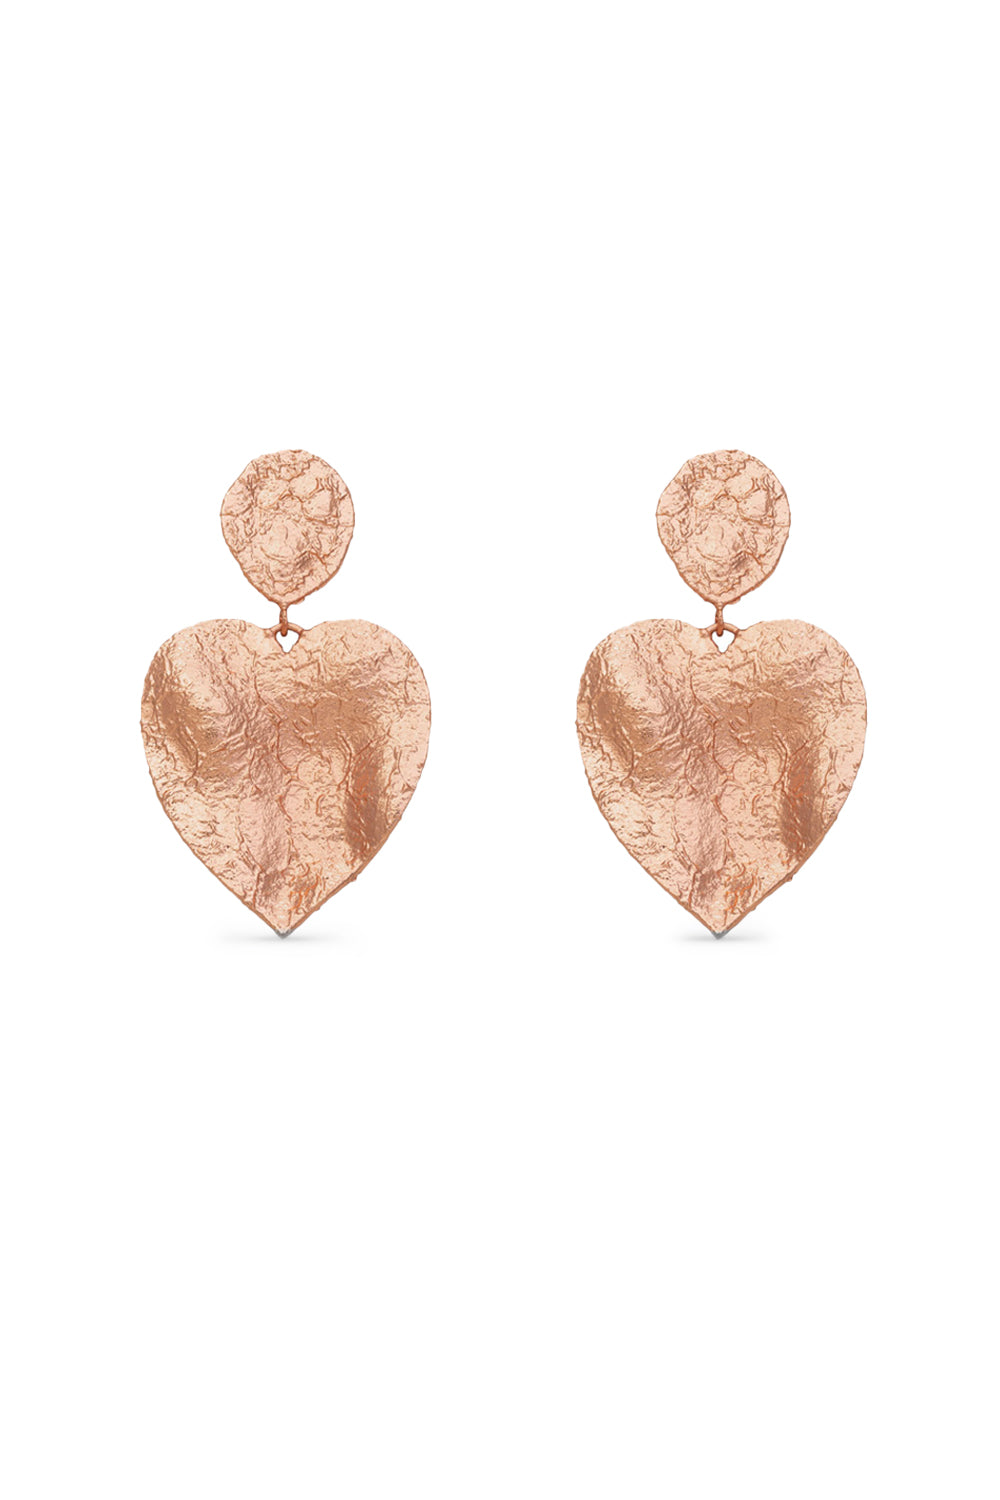 Crushed Heart Rose Gold Earrings